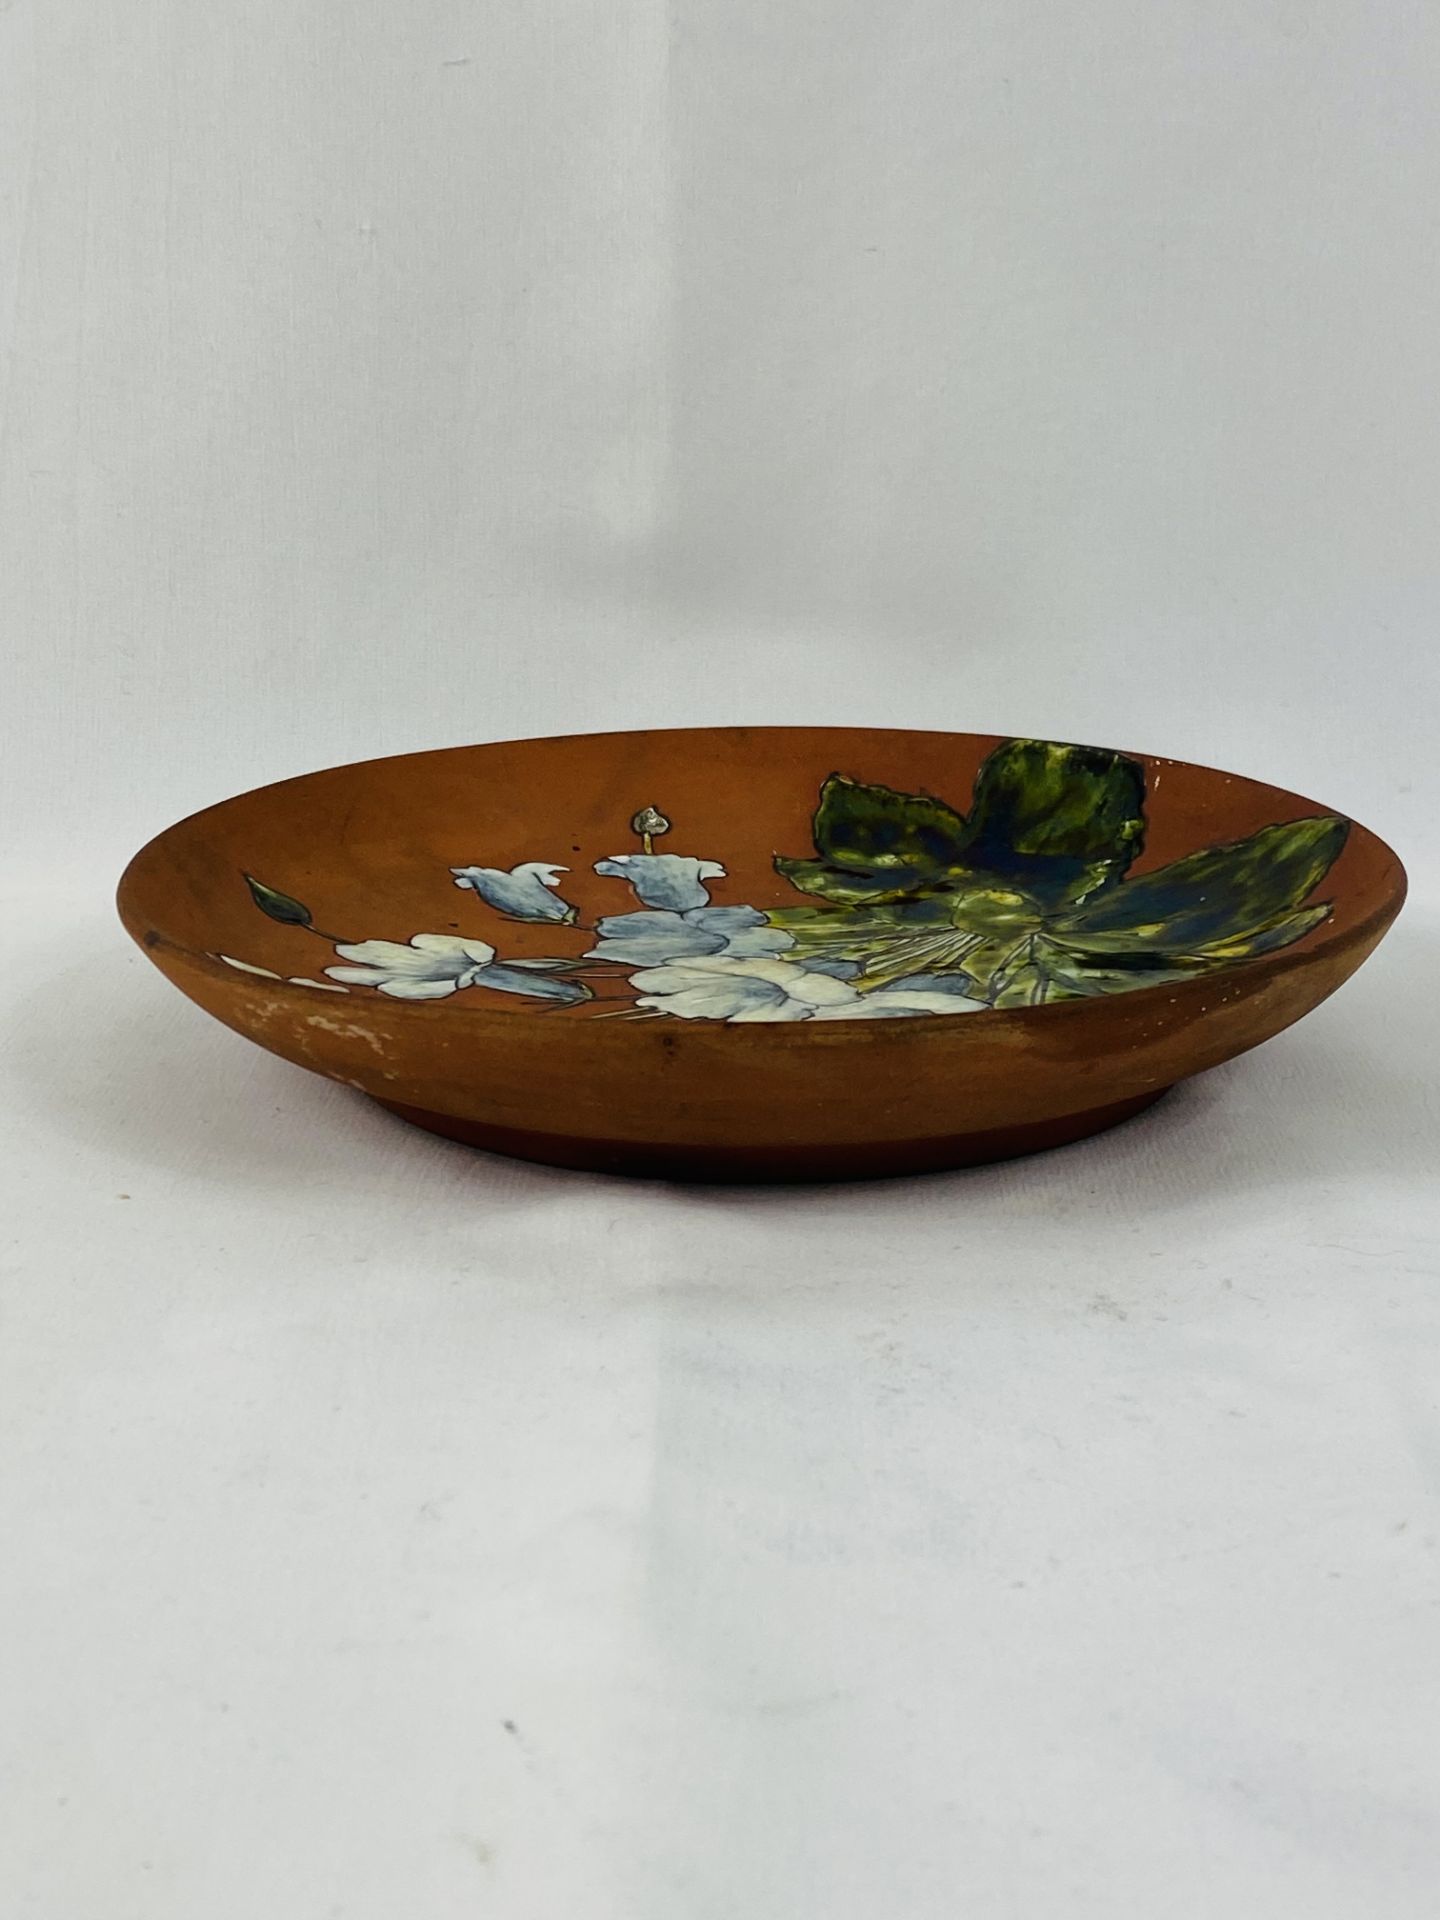 Christopher Dresser for Linthorpe Pottery bowl - Image 4 of 4